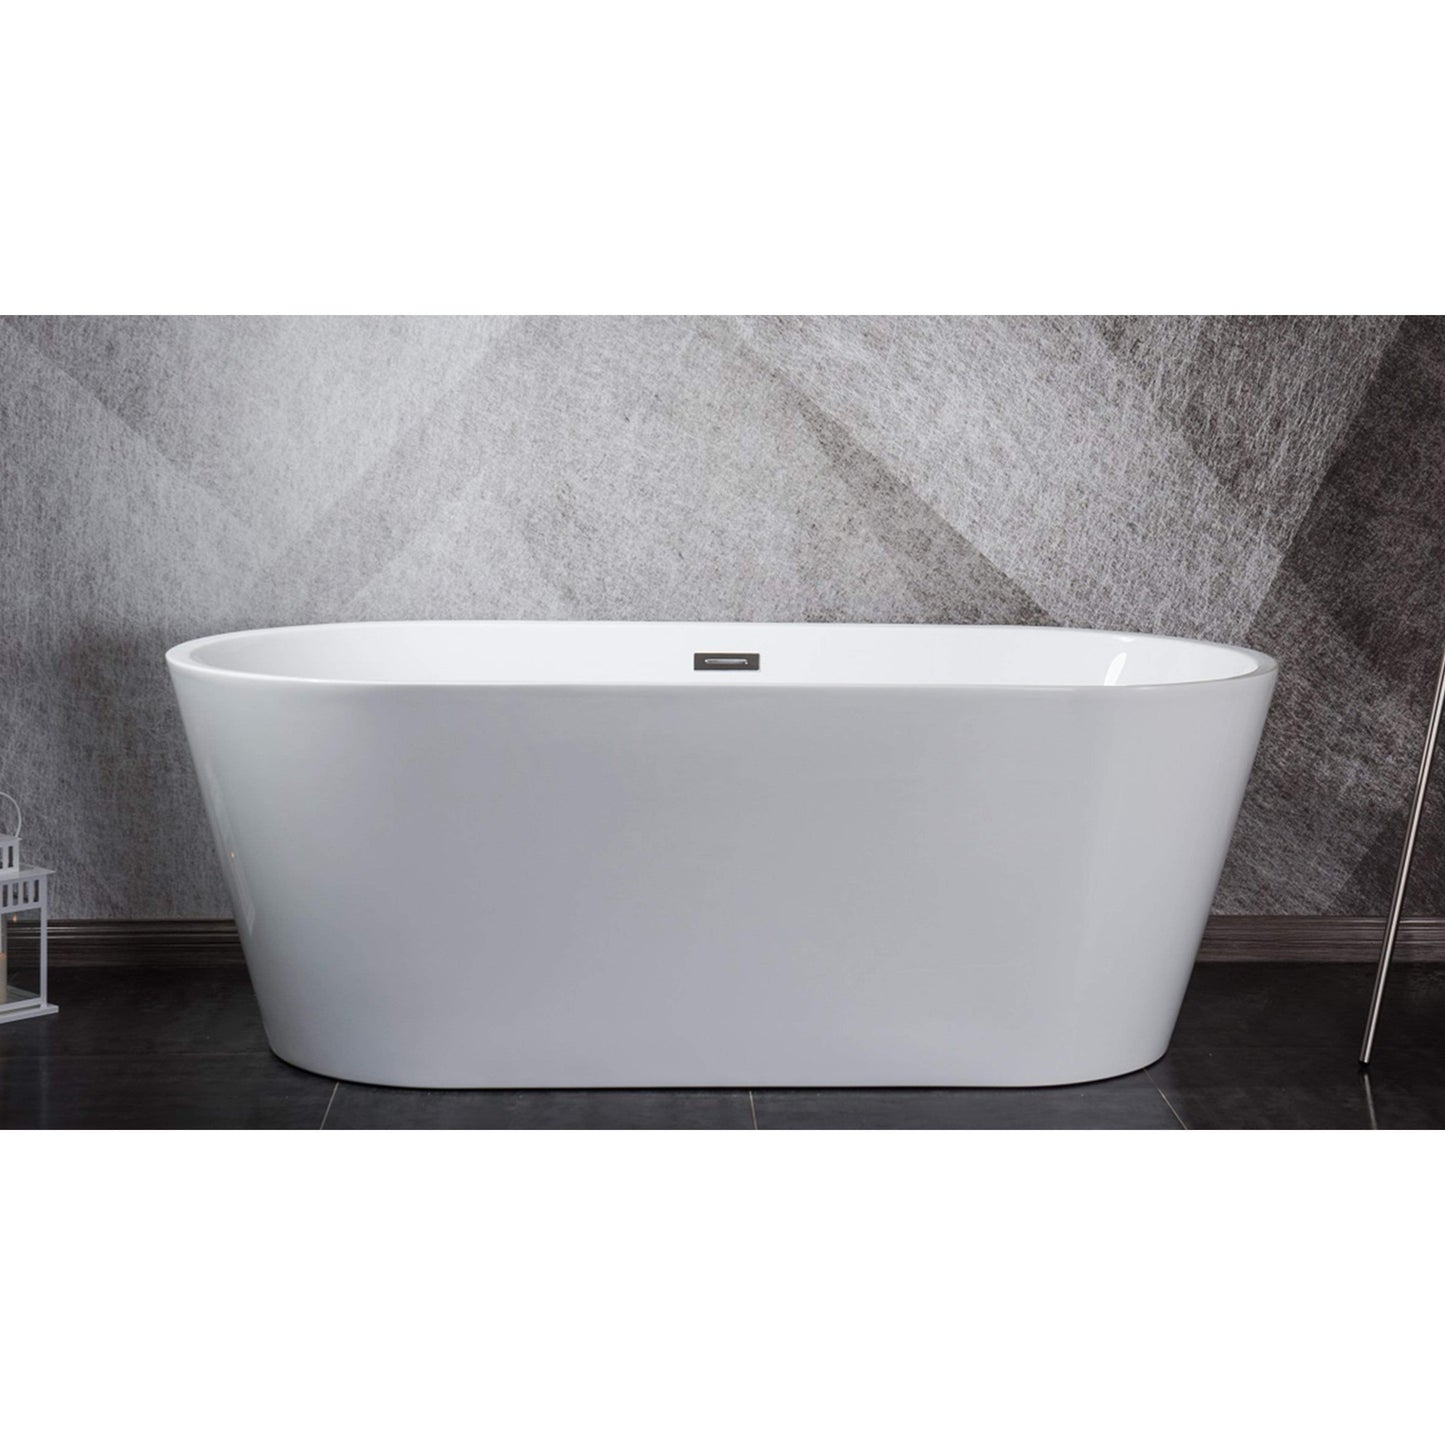 Bell + Modern Bathtubs and Tub Fillers Montserrat Free Standing Acrylic Bathtub with Chrome Drain 59" x 27.5" x 22"